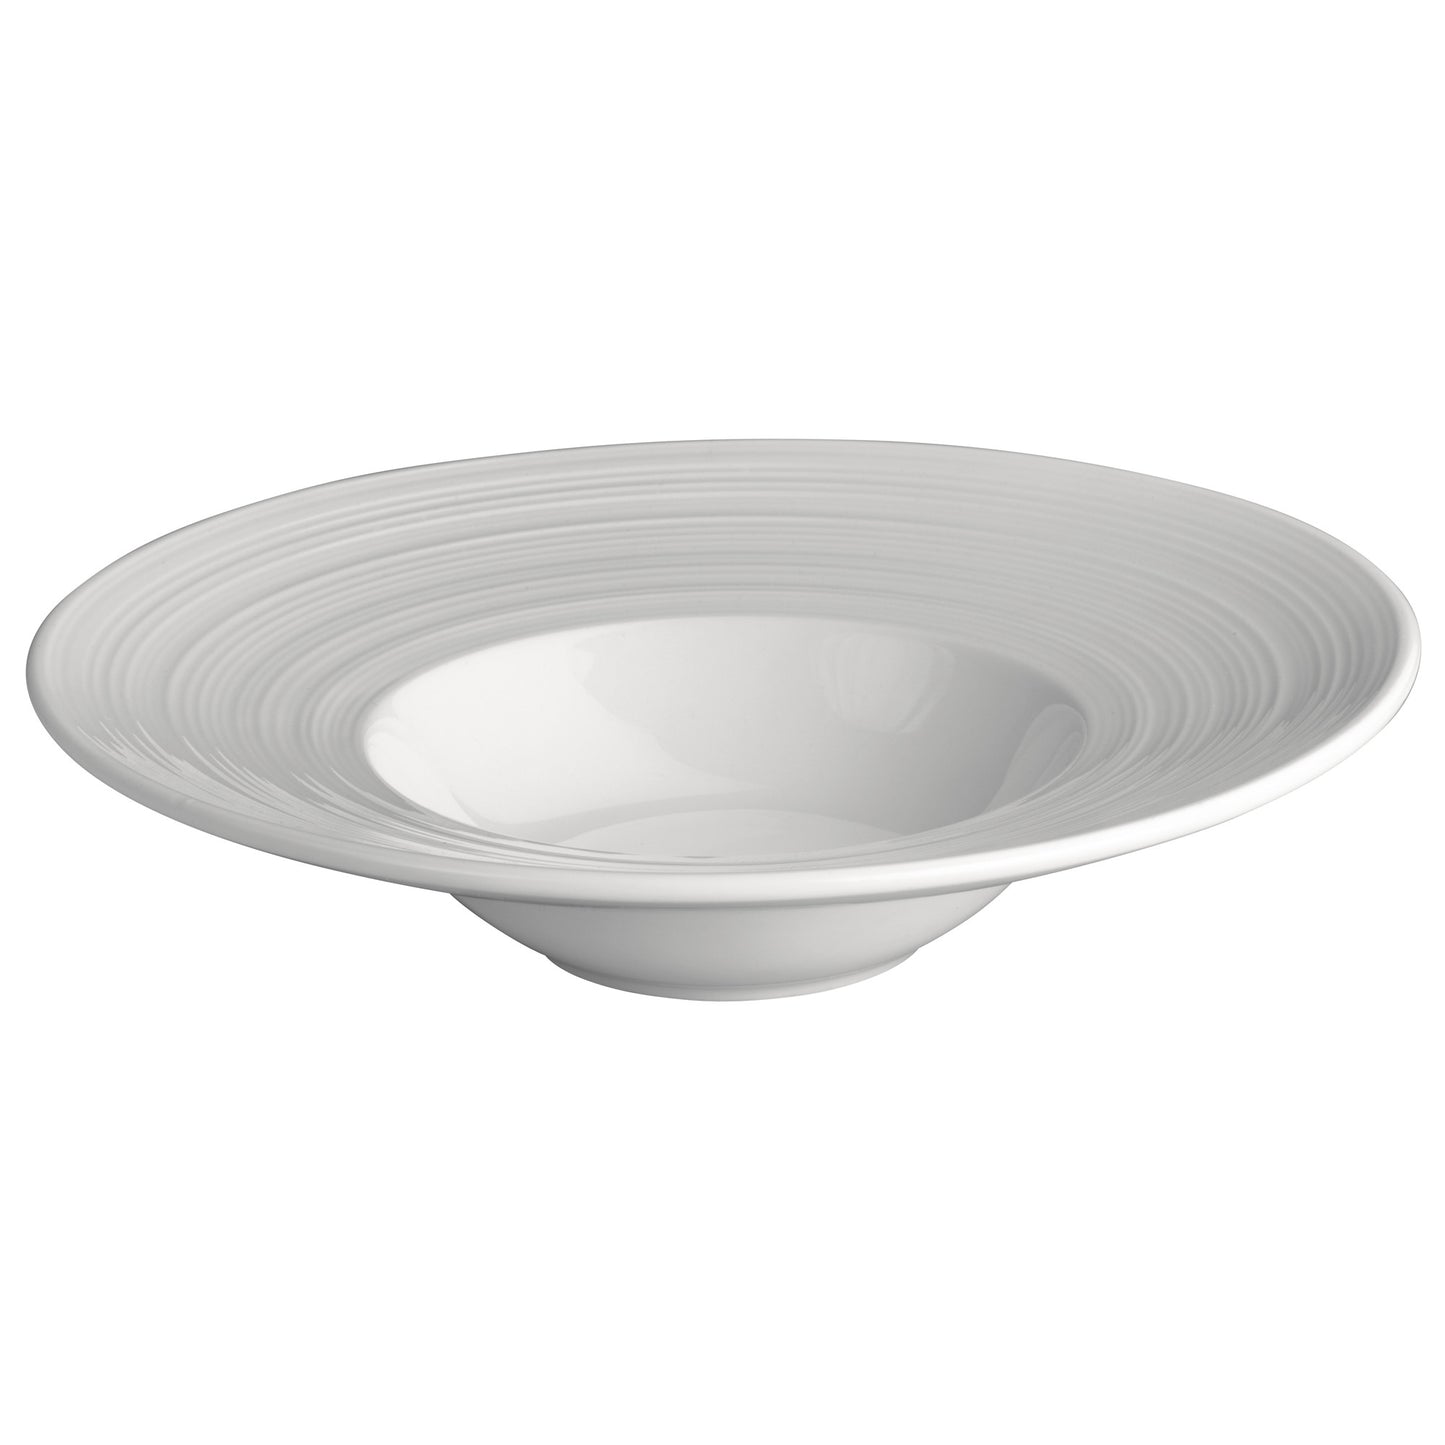 WDP022-103 - 10-1/2"Dia. Porcelain Bowl, Bright White, 12 pcs/case